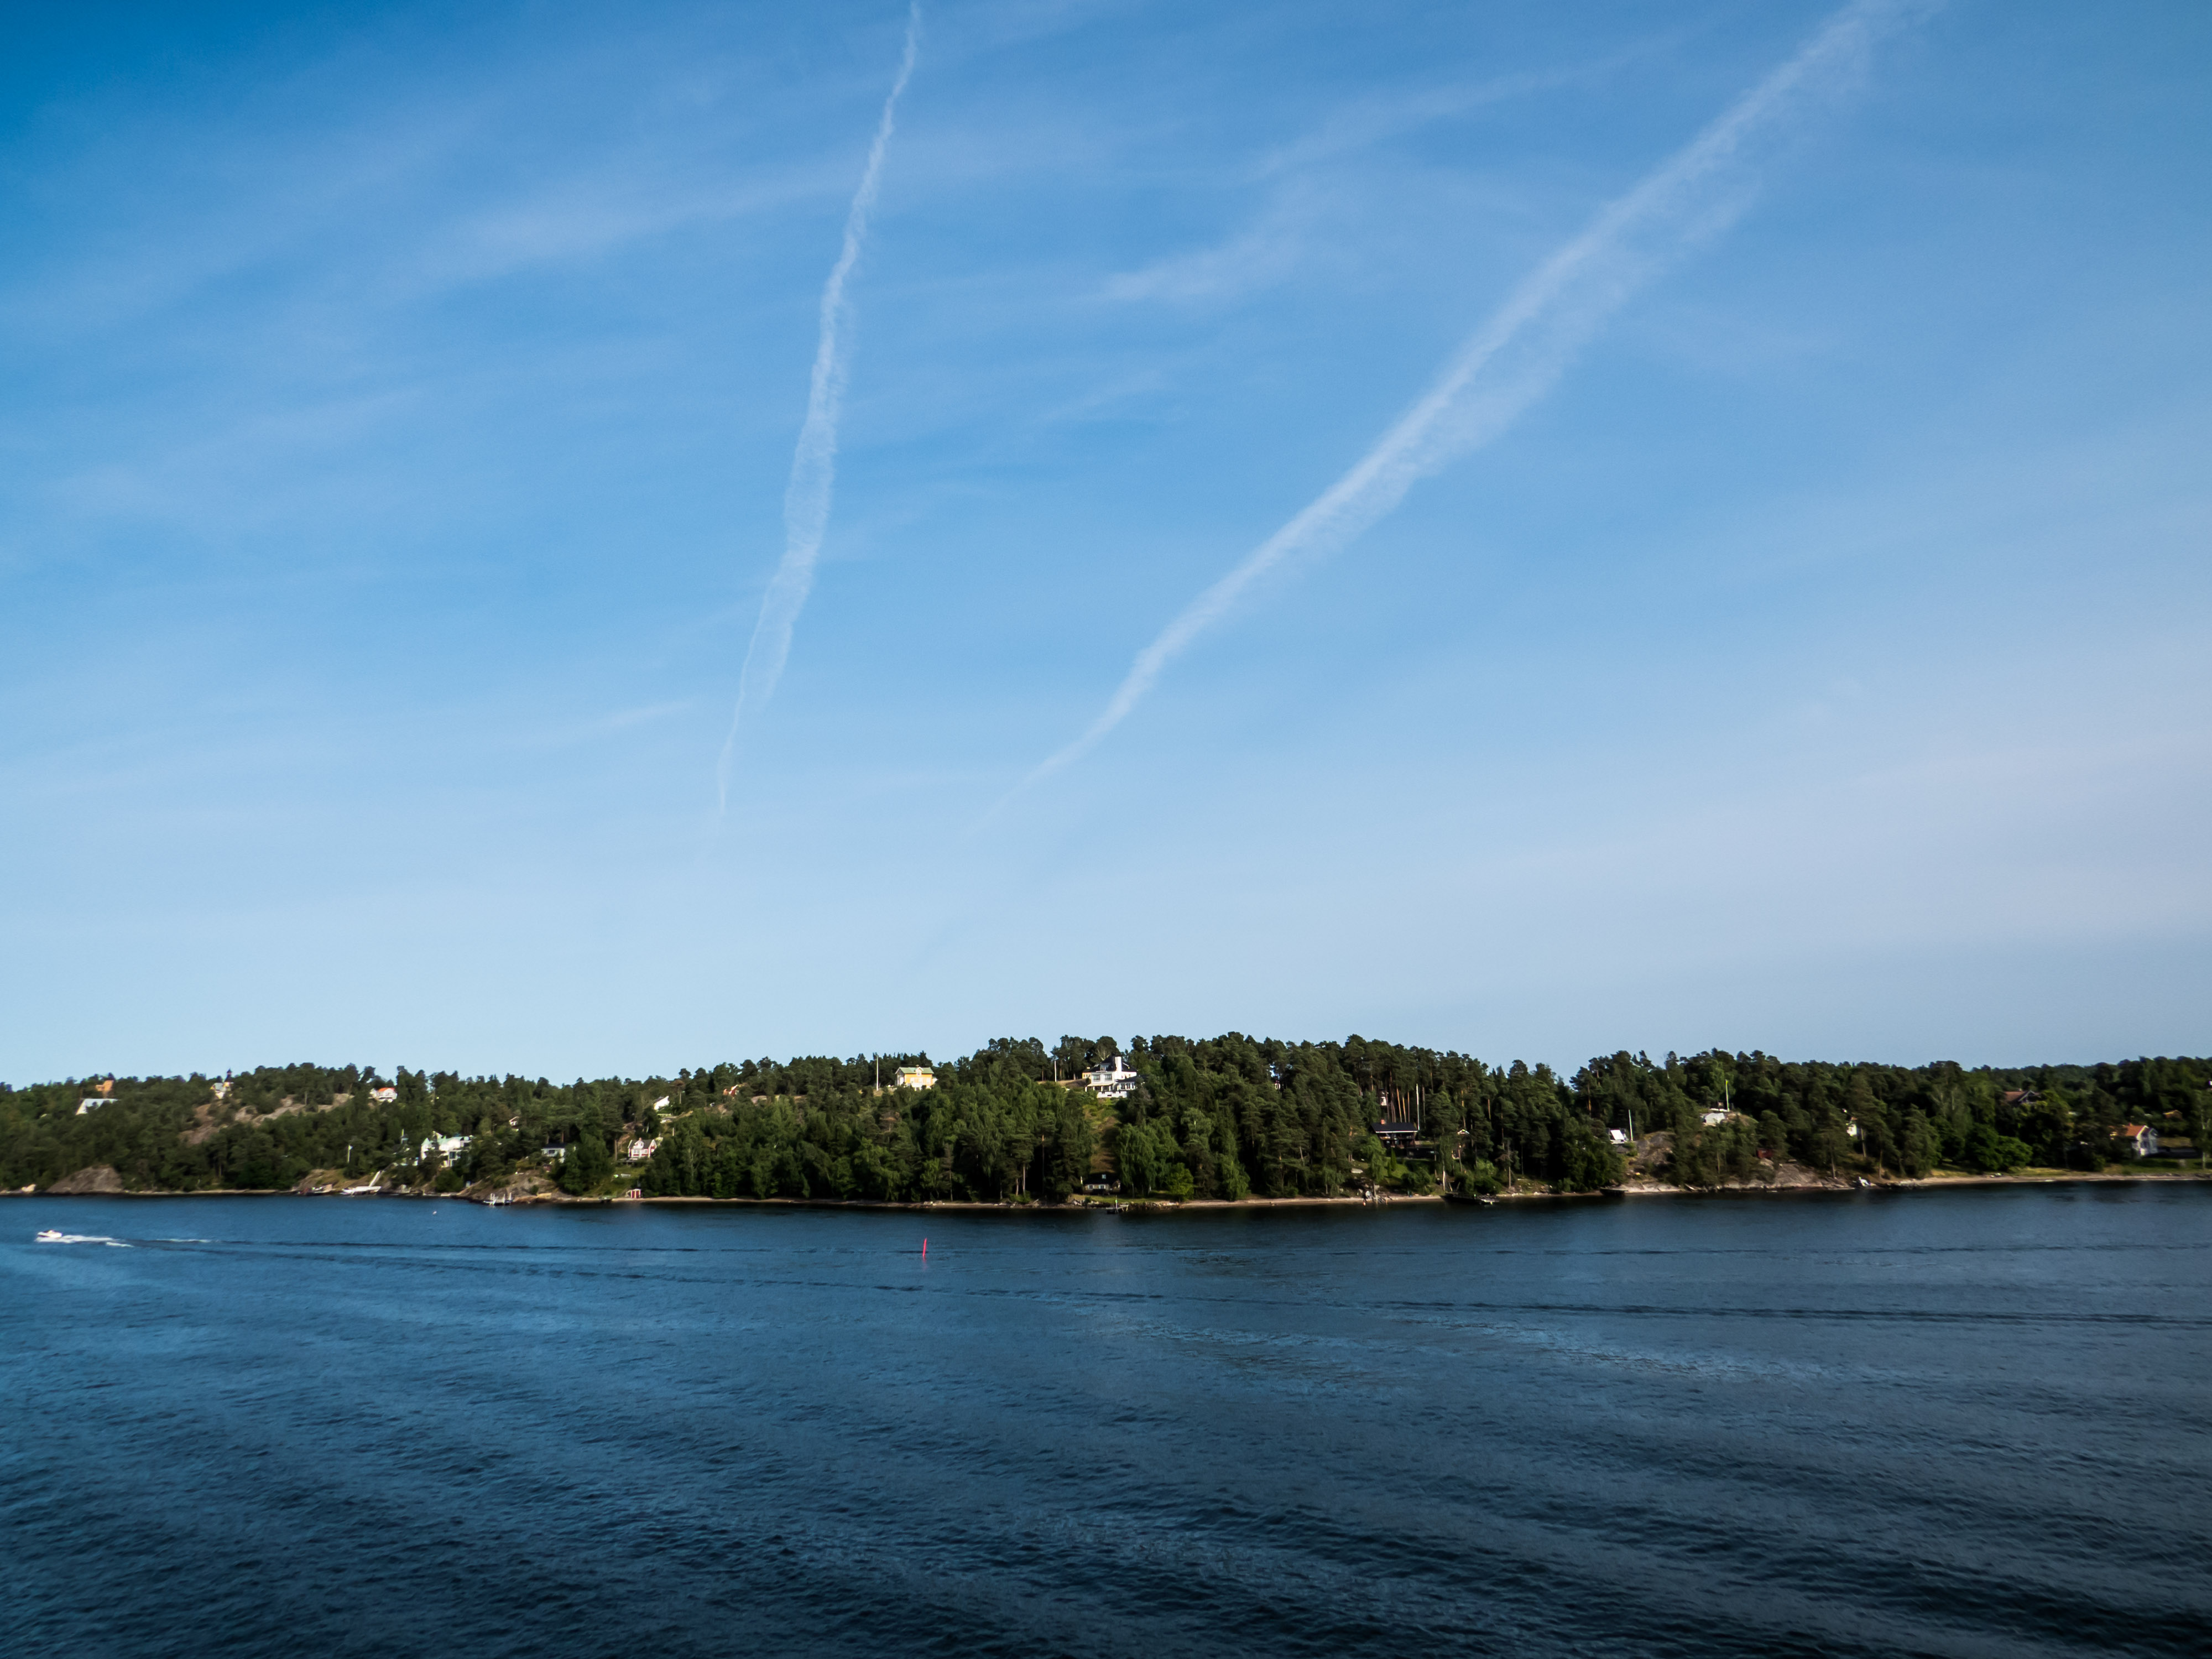 Stockholm archipelago - islands photo